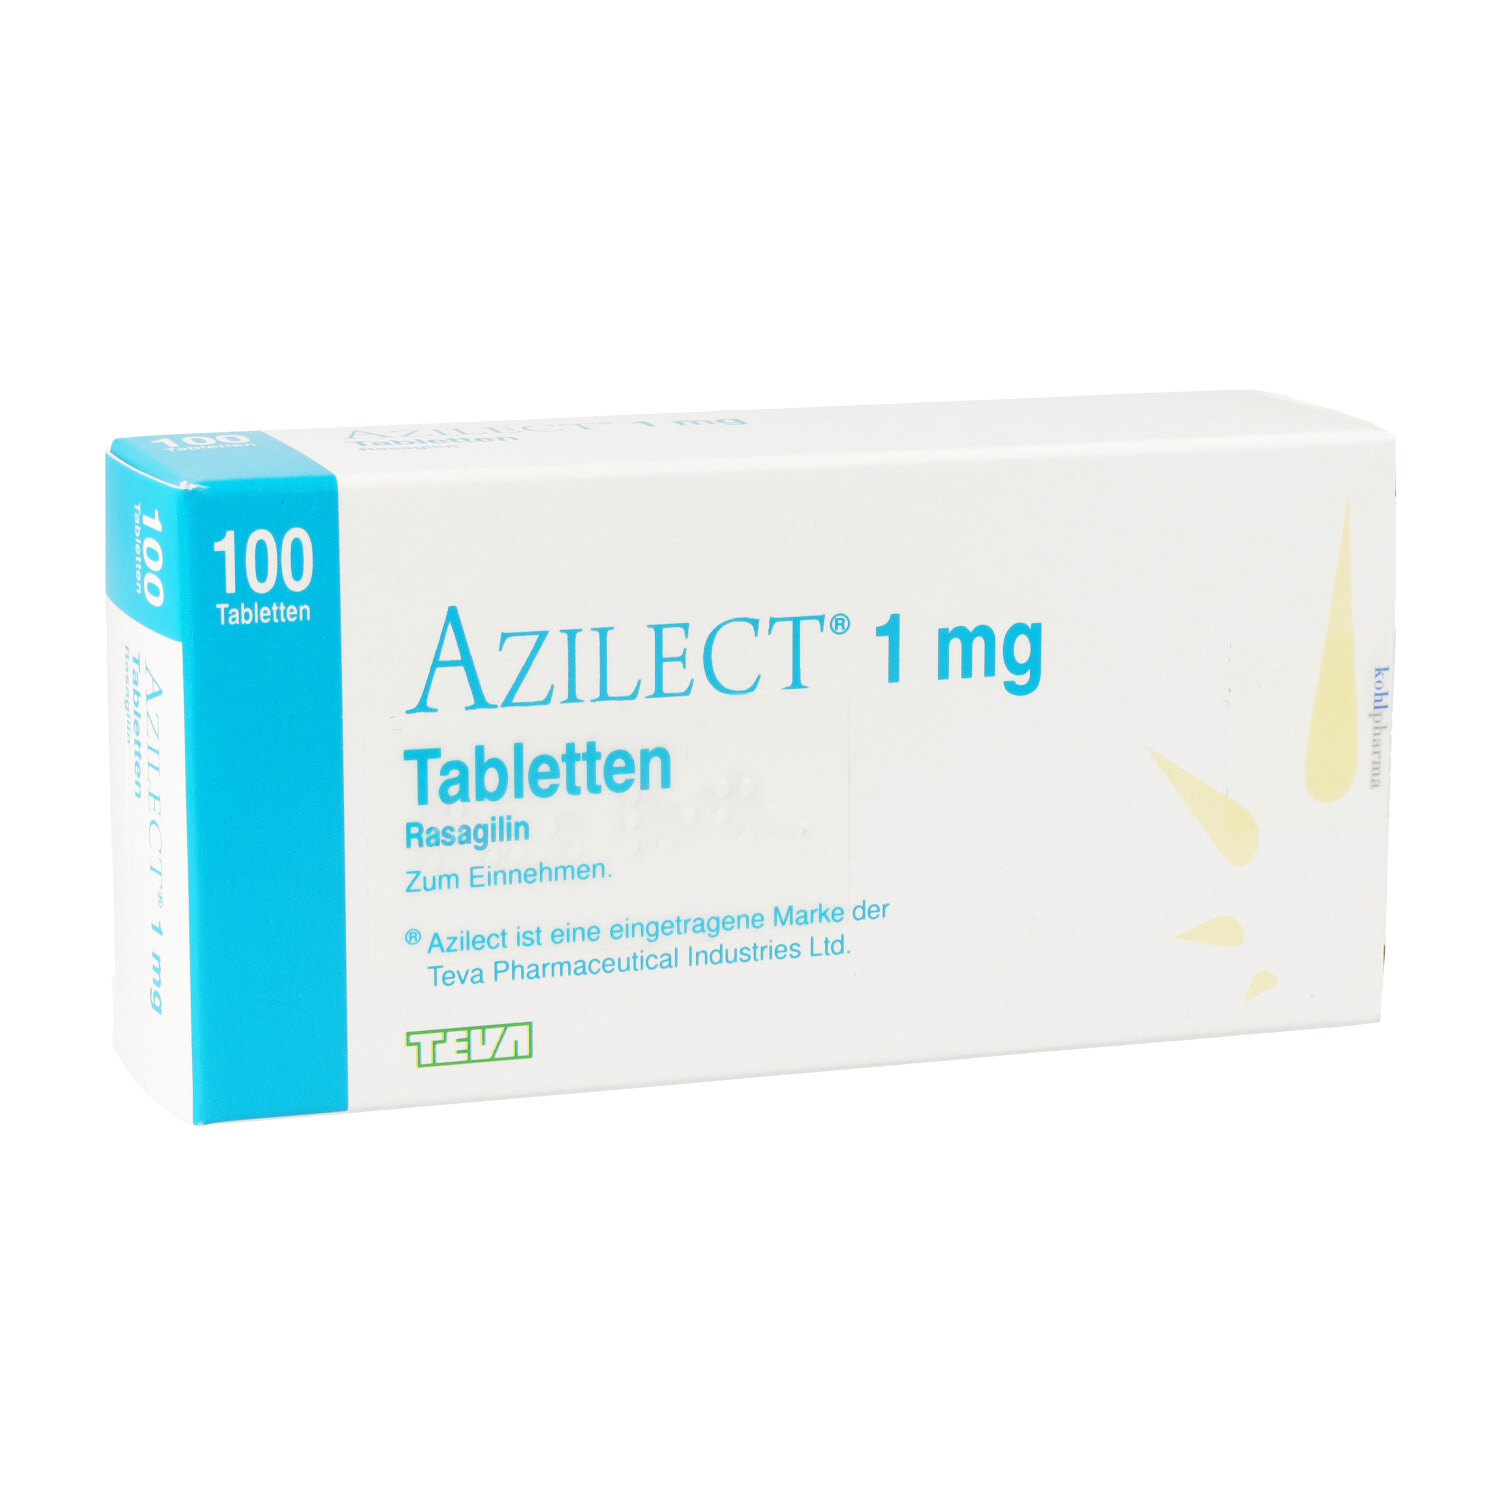 AZILECT 1 mg Tabletten